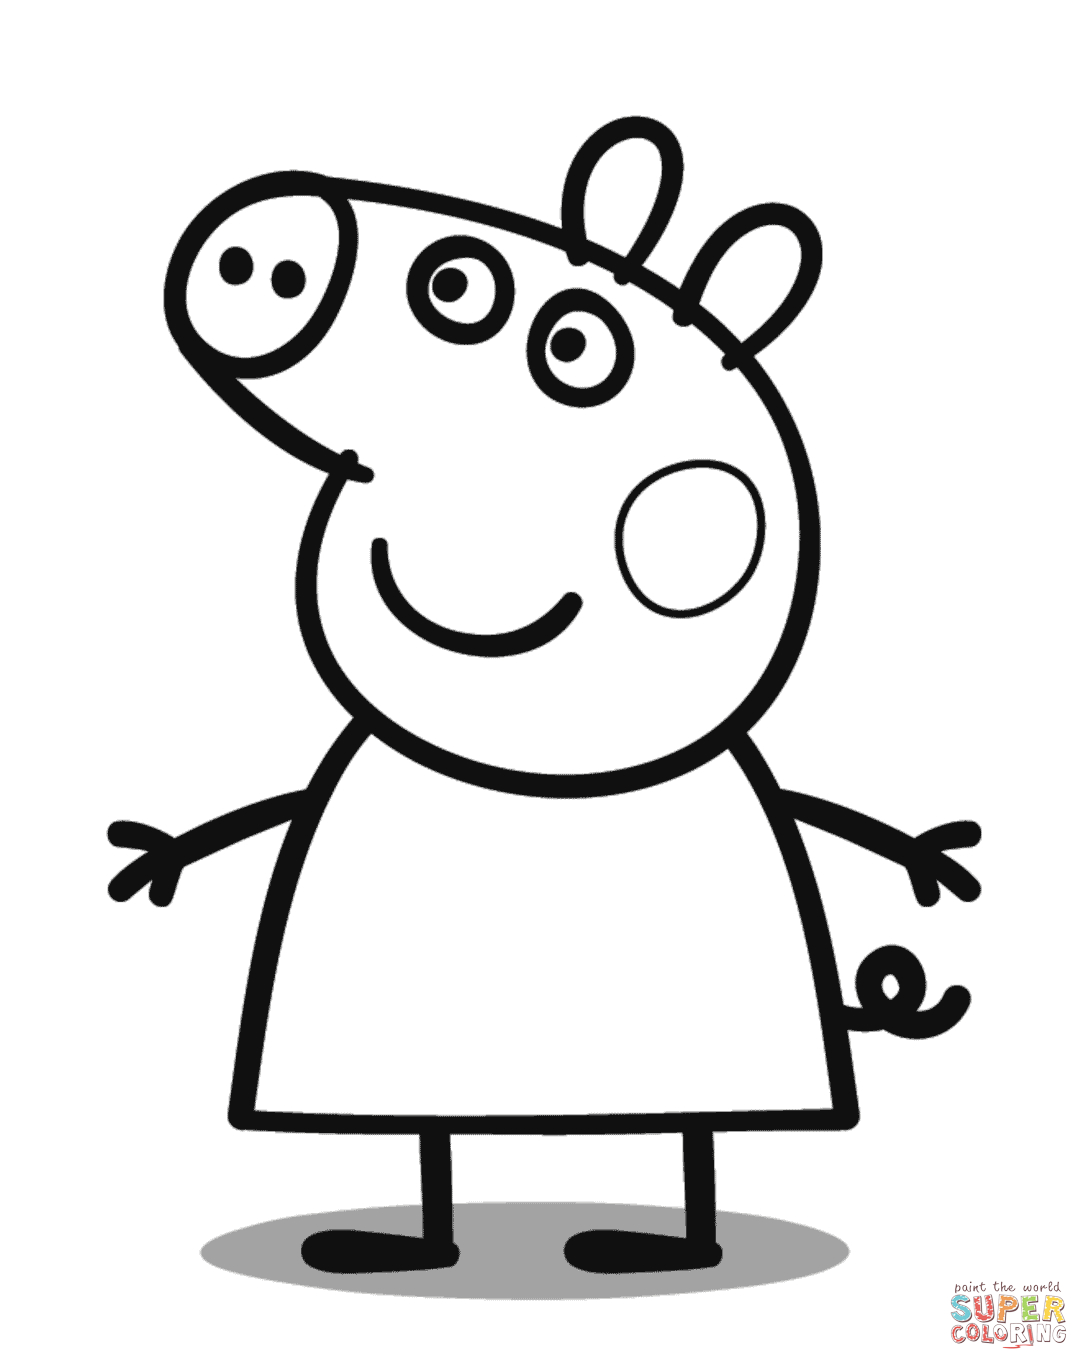 Peppa Pig Coloring Page | Free Printable Coloring Pages - Pig Coloring Sheets Free Printable